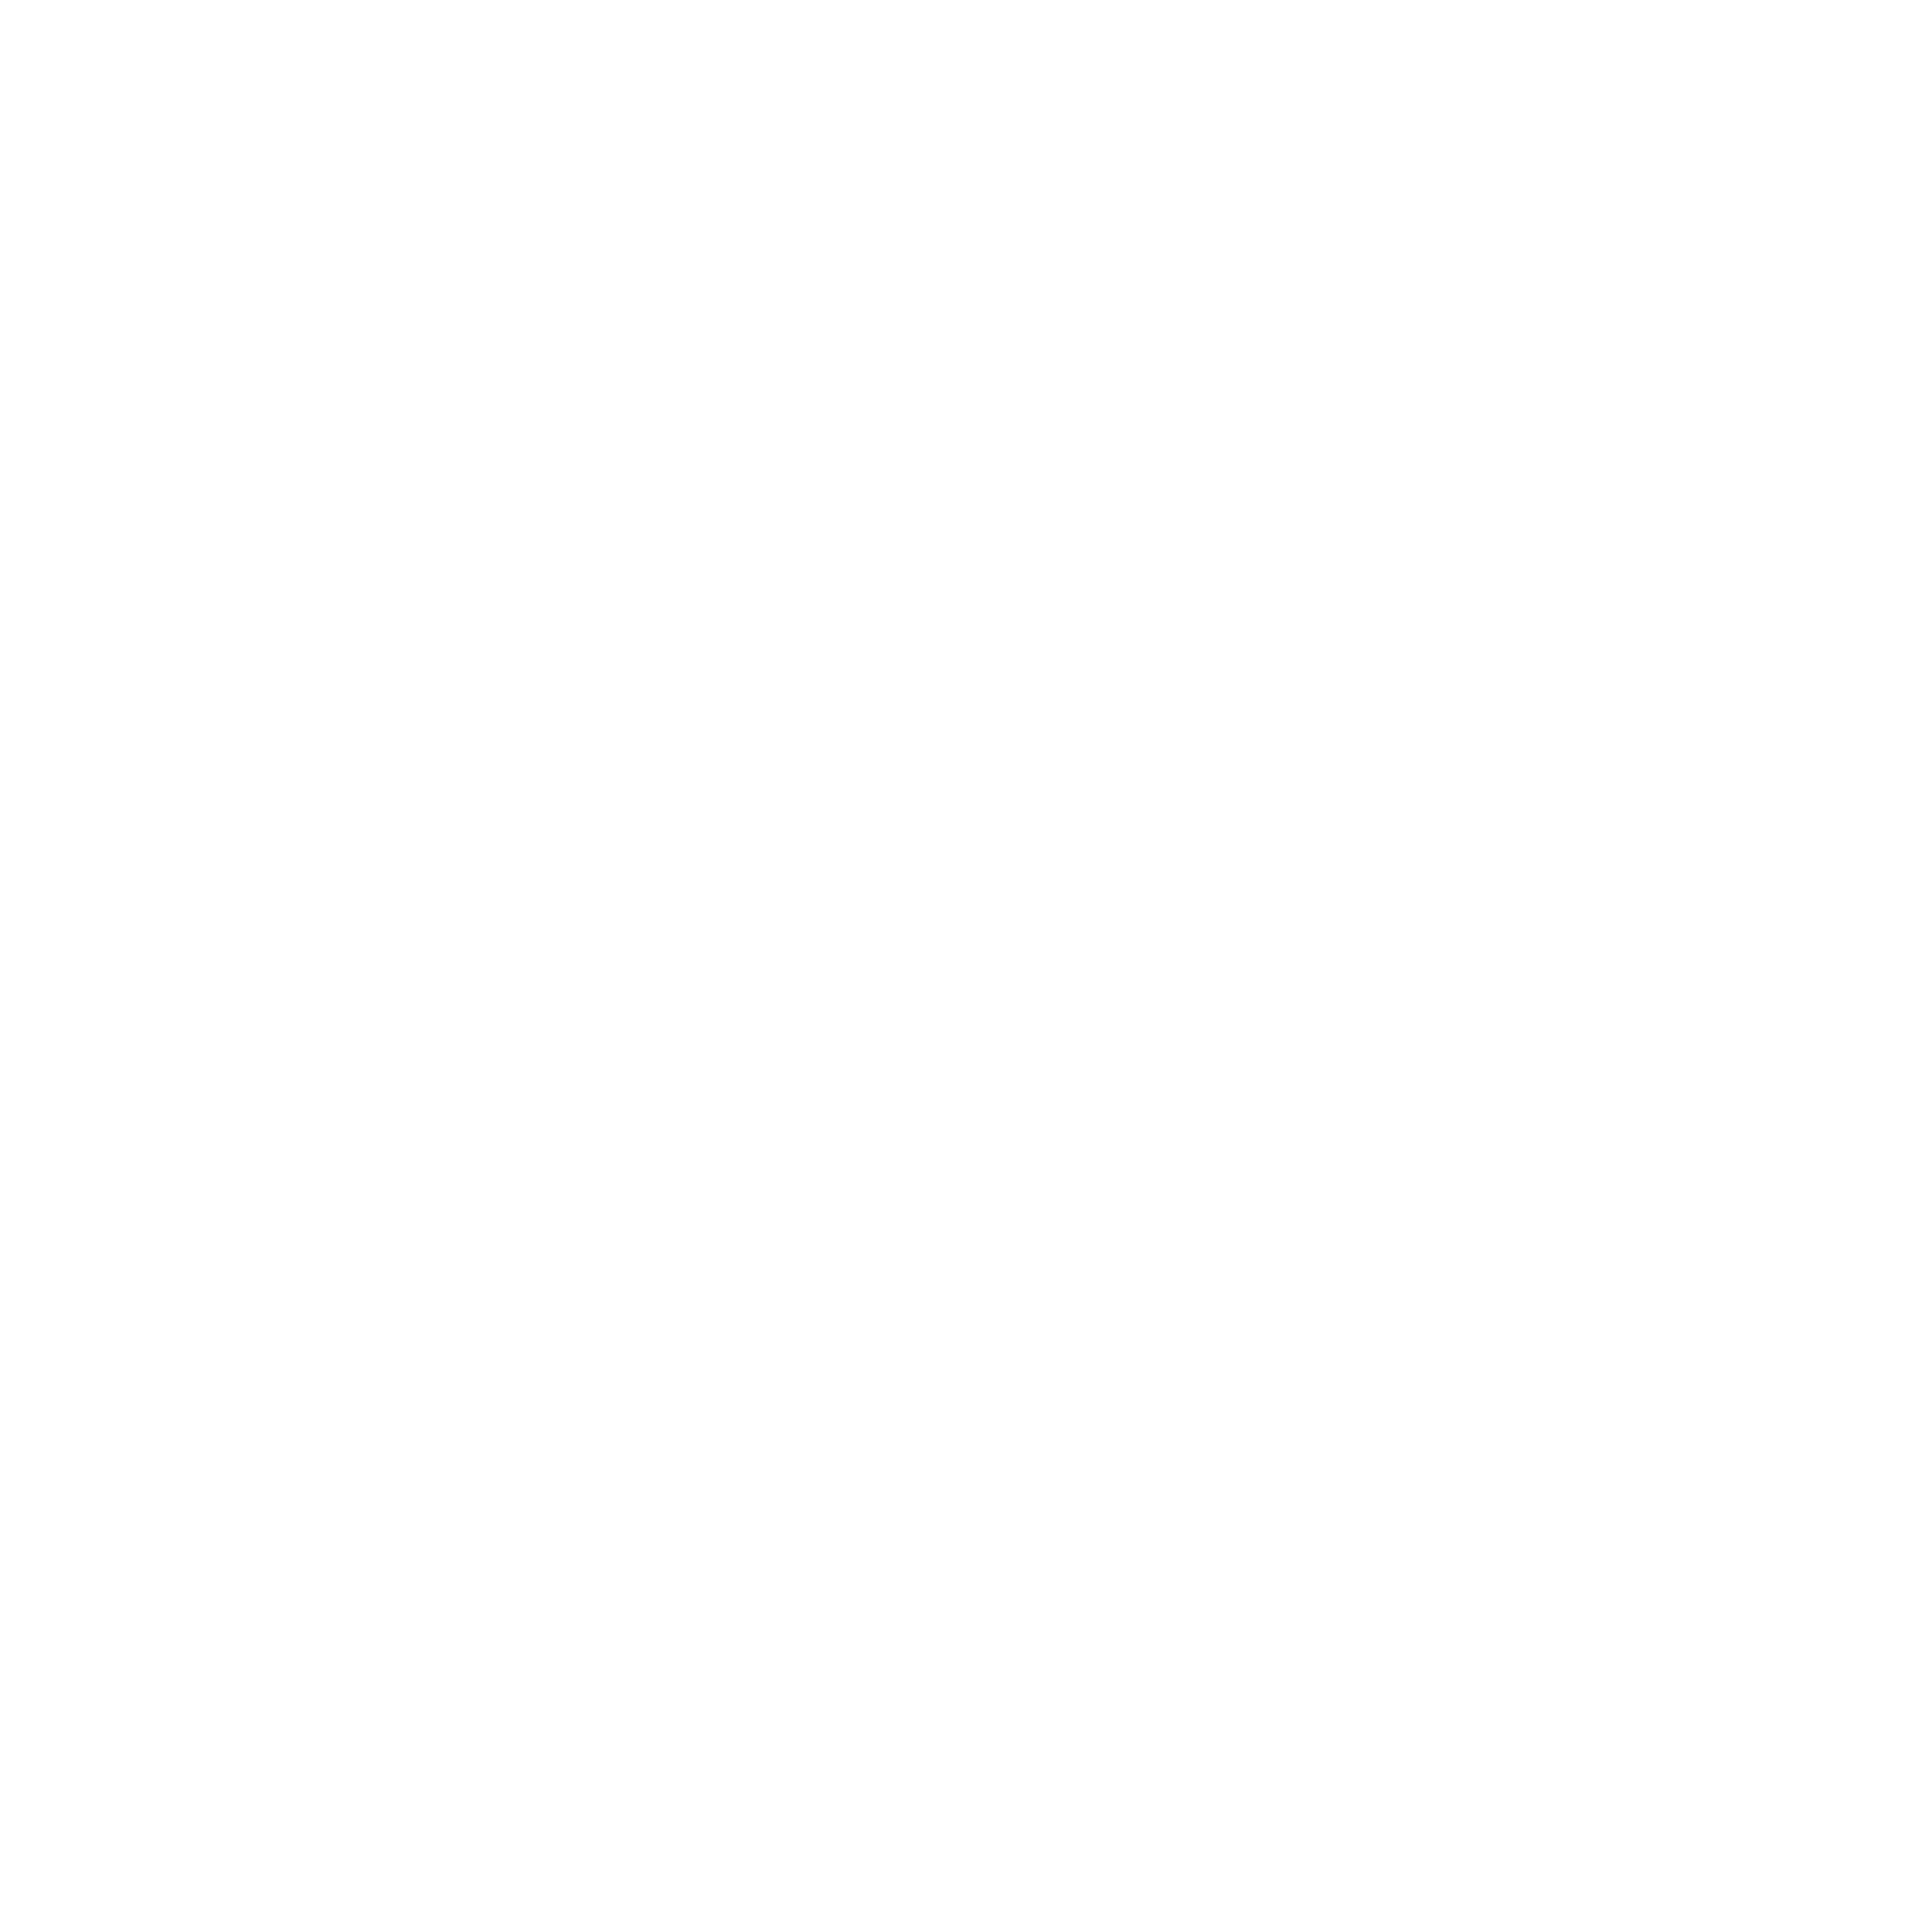 Amazon Go Logo Transparent Photo